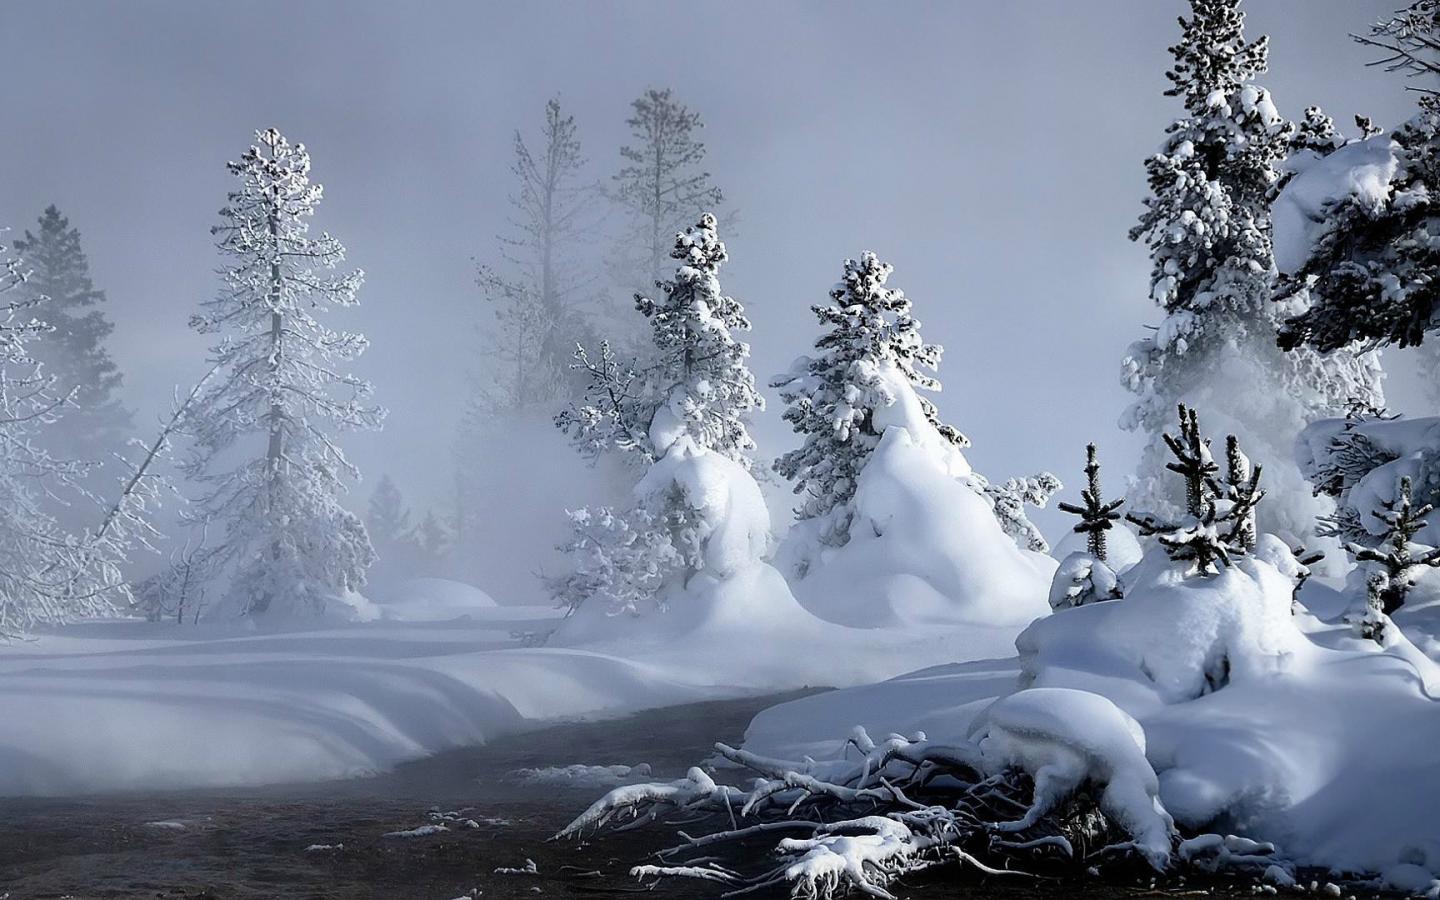 snowfall wallpaper hd,snow,winter,nature,freezing,tree